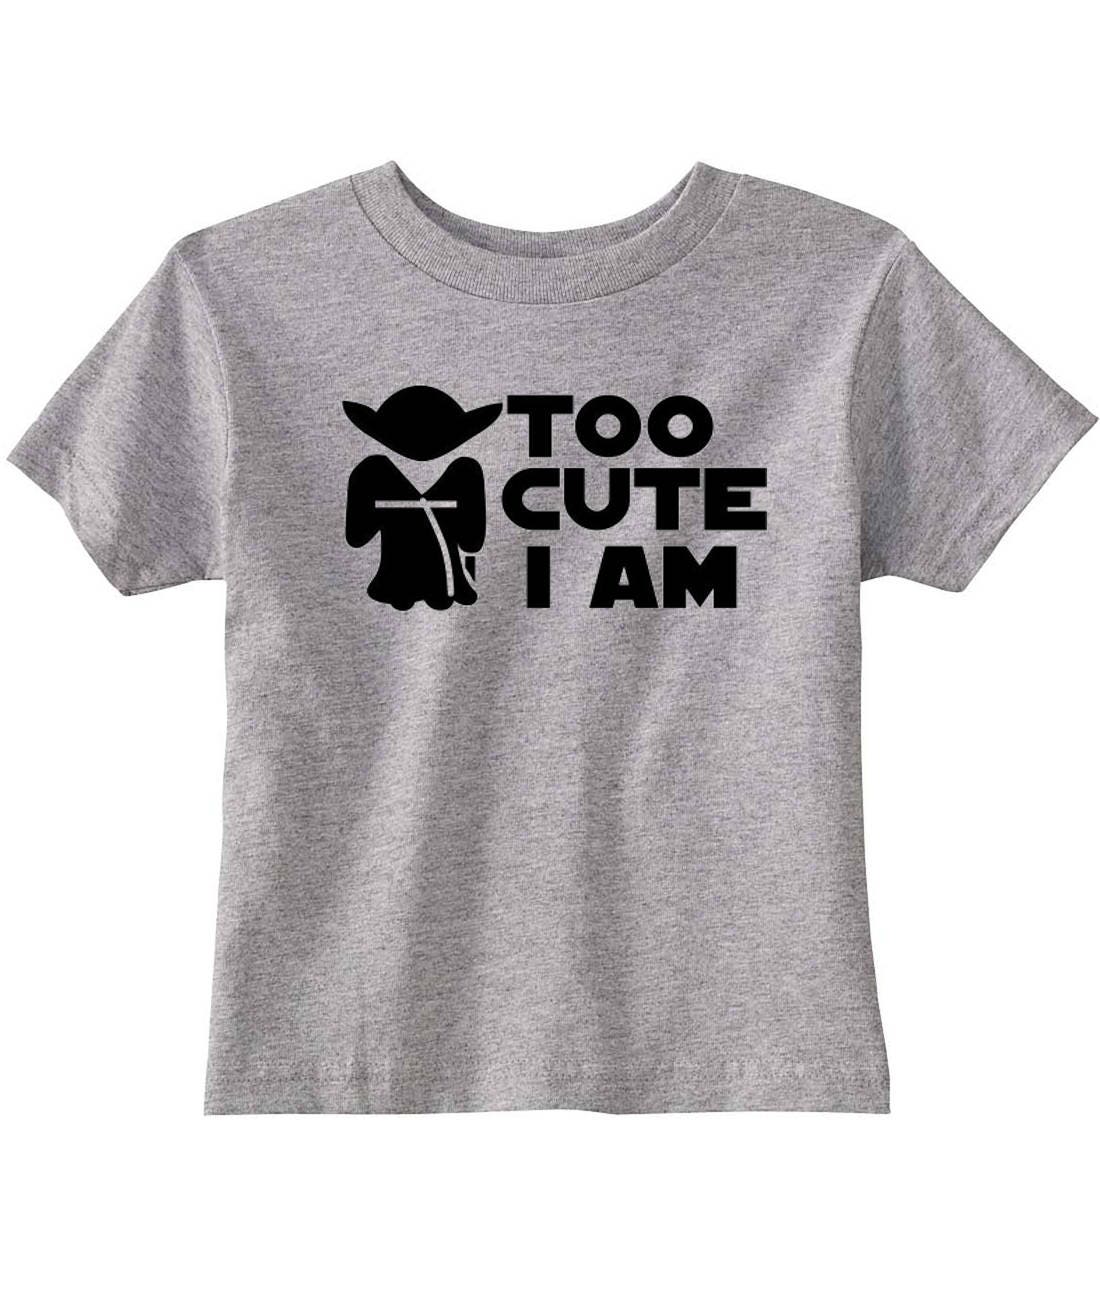 Star Wars Too Cute I Am Toddler Shirt | Etsy